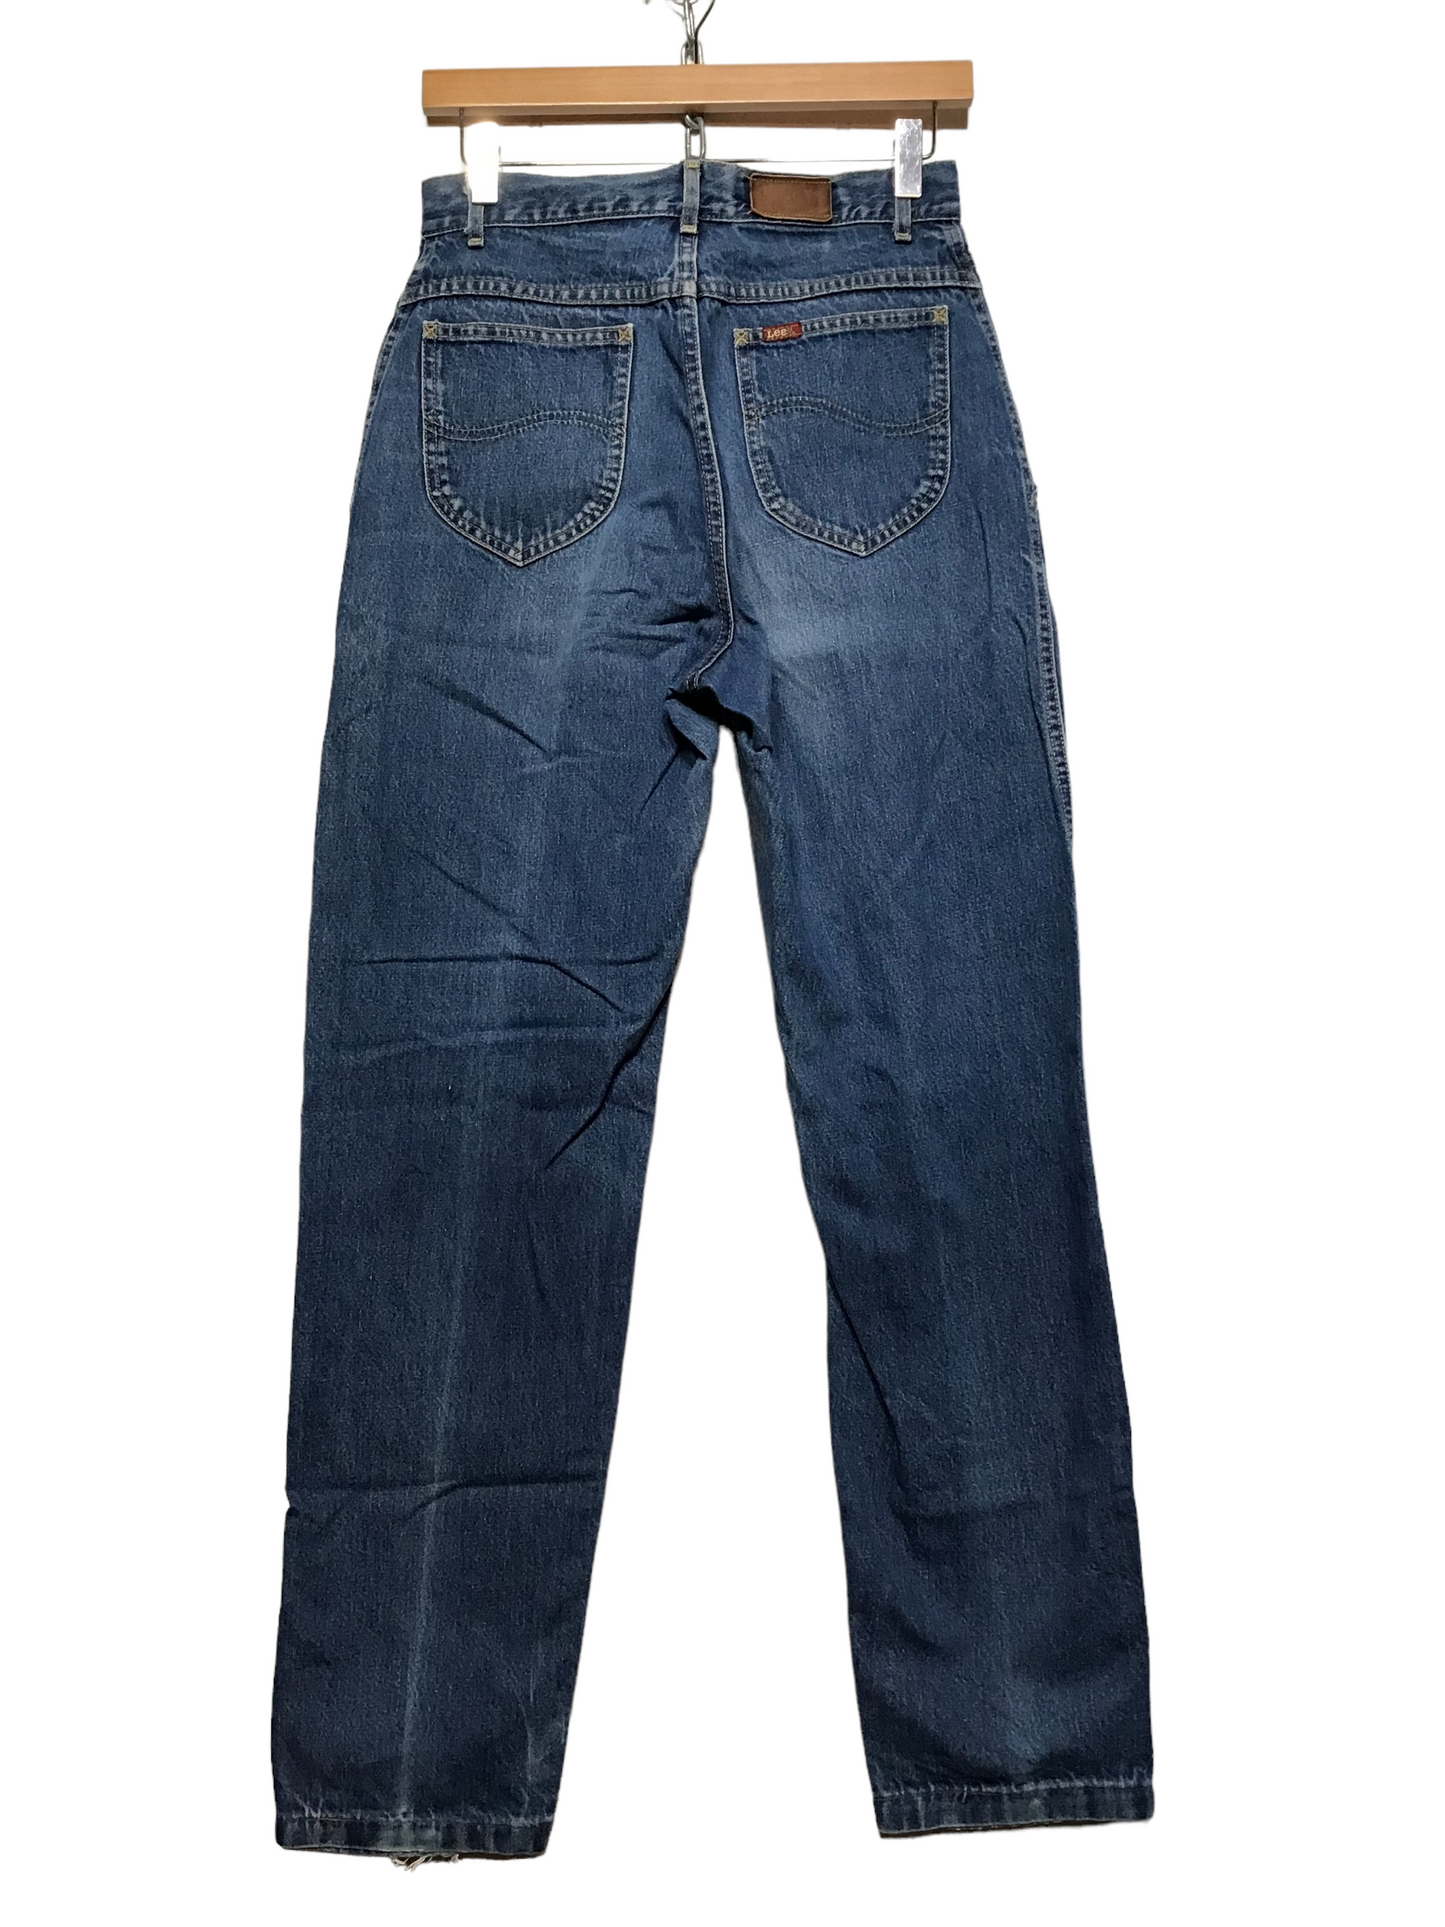 Lee High Waisted Jeans (28X30)